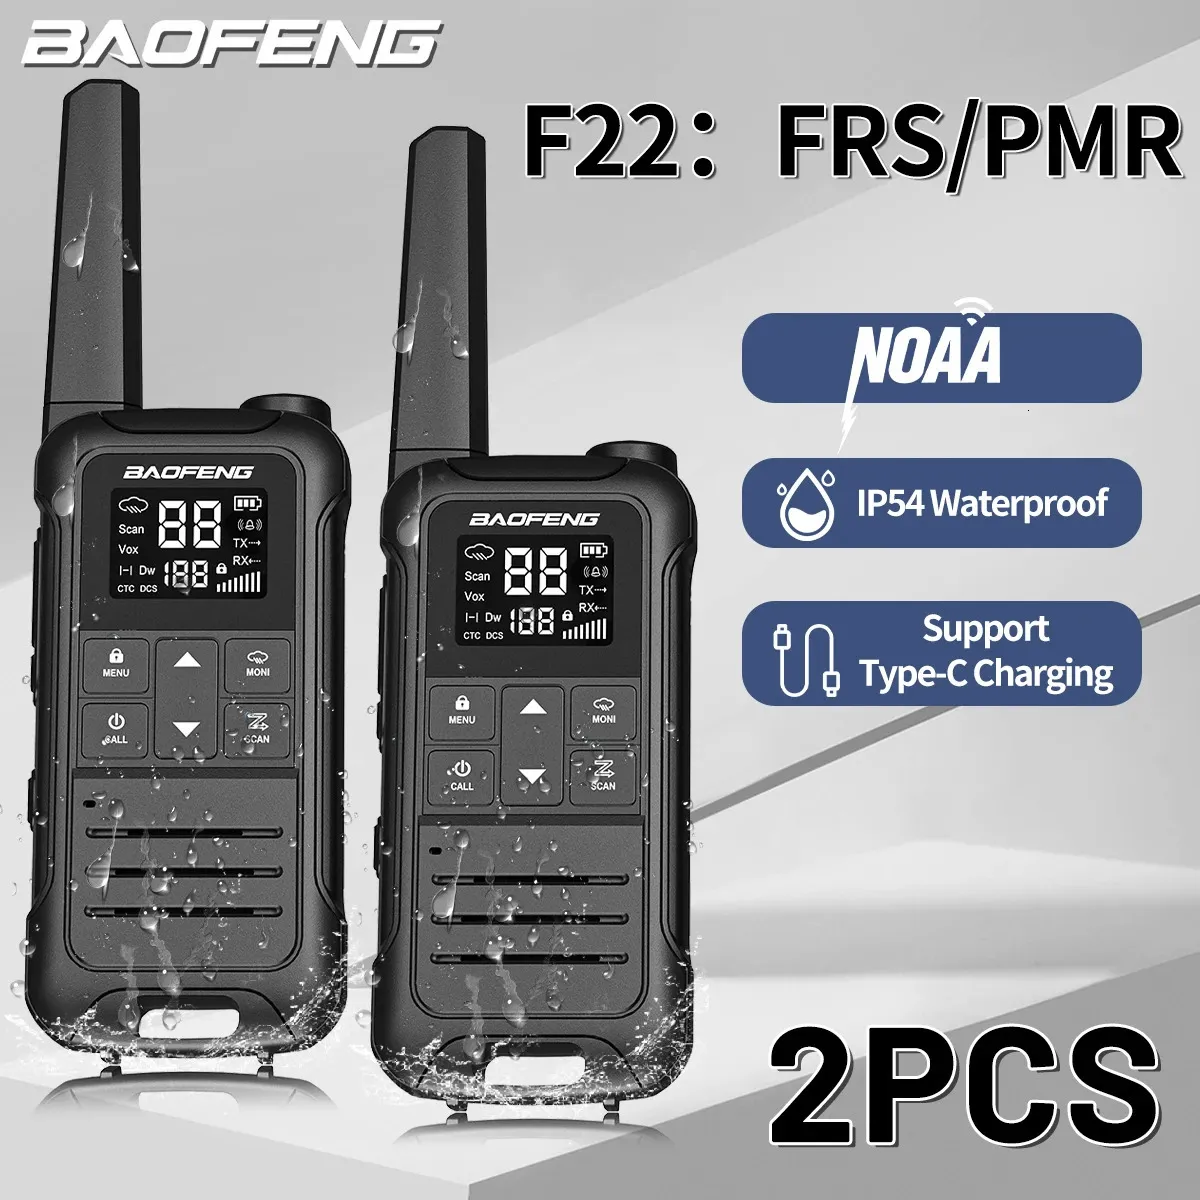 2PCS Baofeng F22 PMR FRS Mini Walkie Talkie Waterproof TypeC Licencefree NOAA Portable Two Way Ham Radio for Hunting 240510